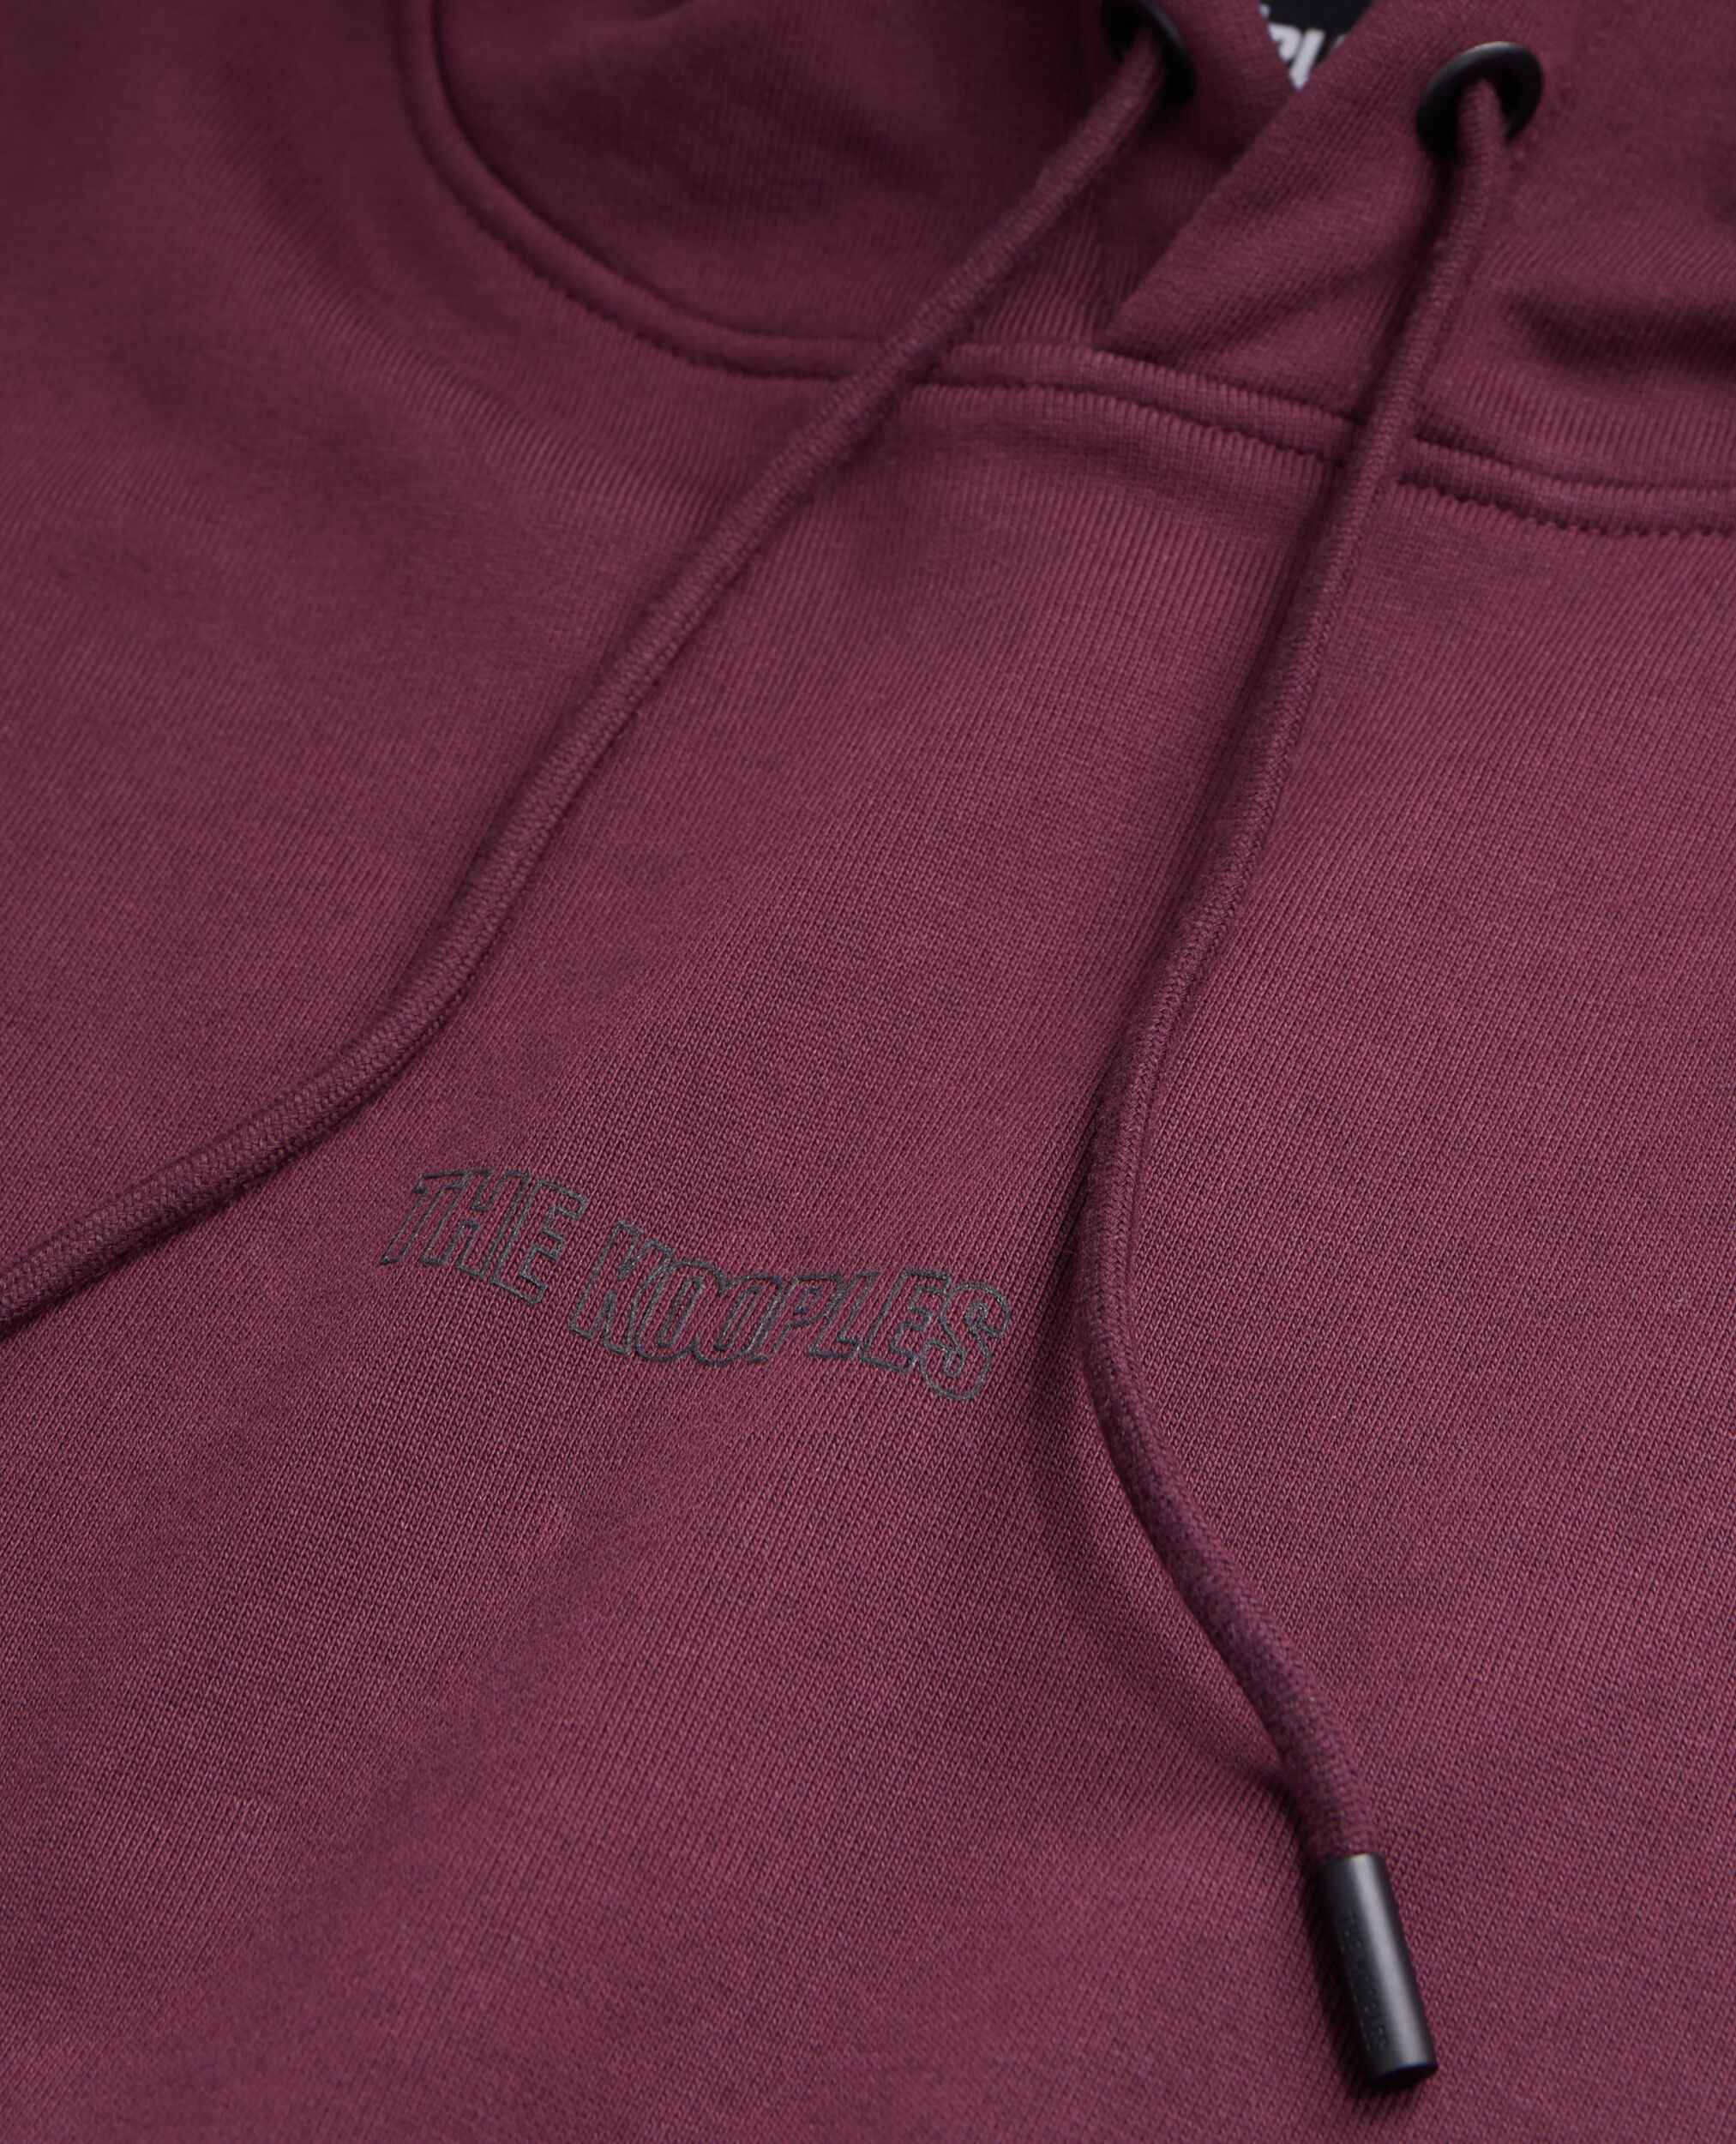 Men's Burgundy hoodie with logo, BORDEAUX, hi-res image number null